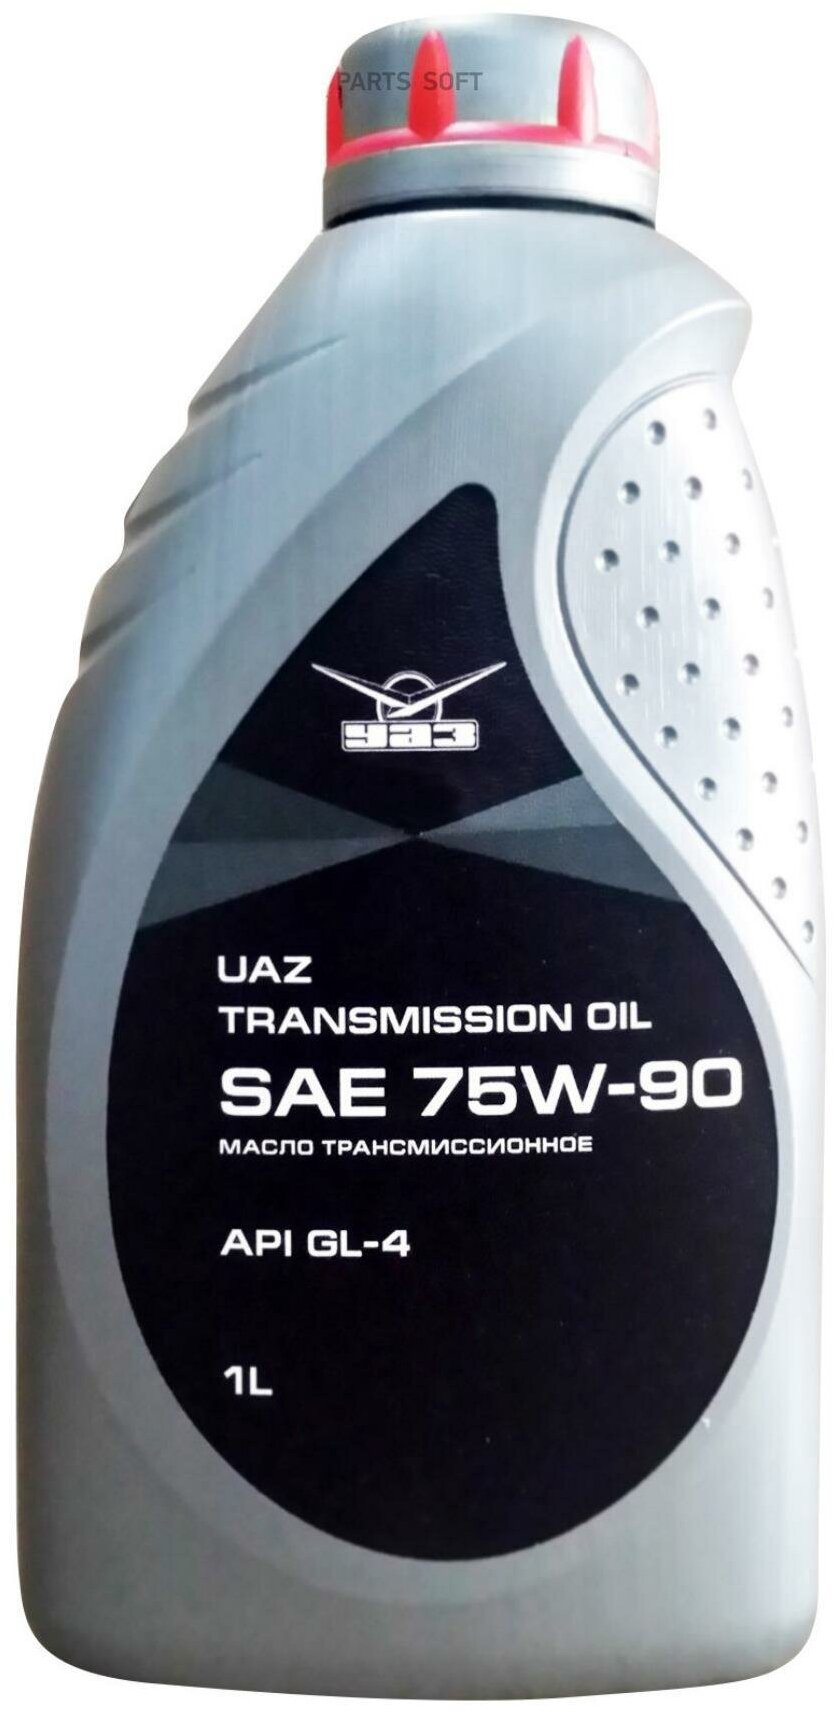 Масло трансмиссионное УАЗ SAE 75W-90 API GL-4 75W-90